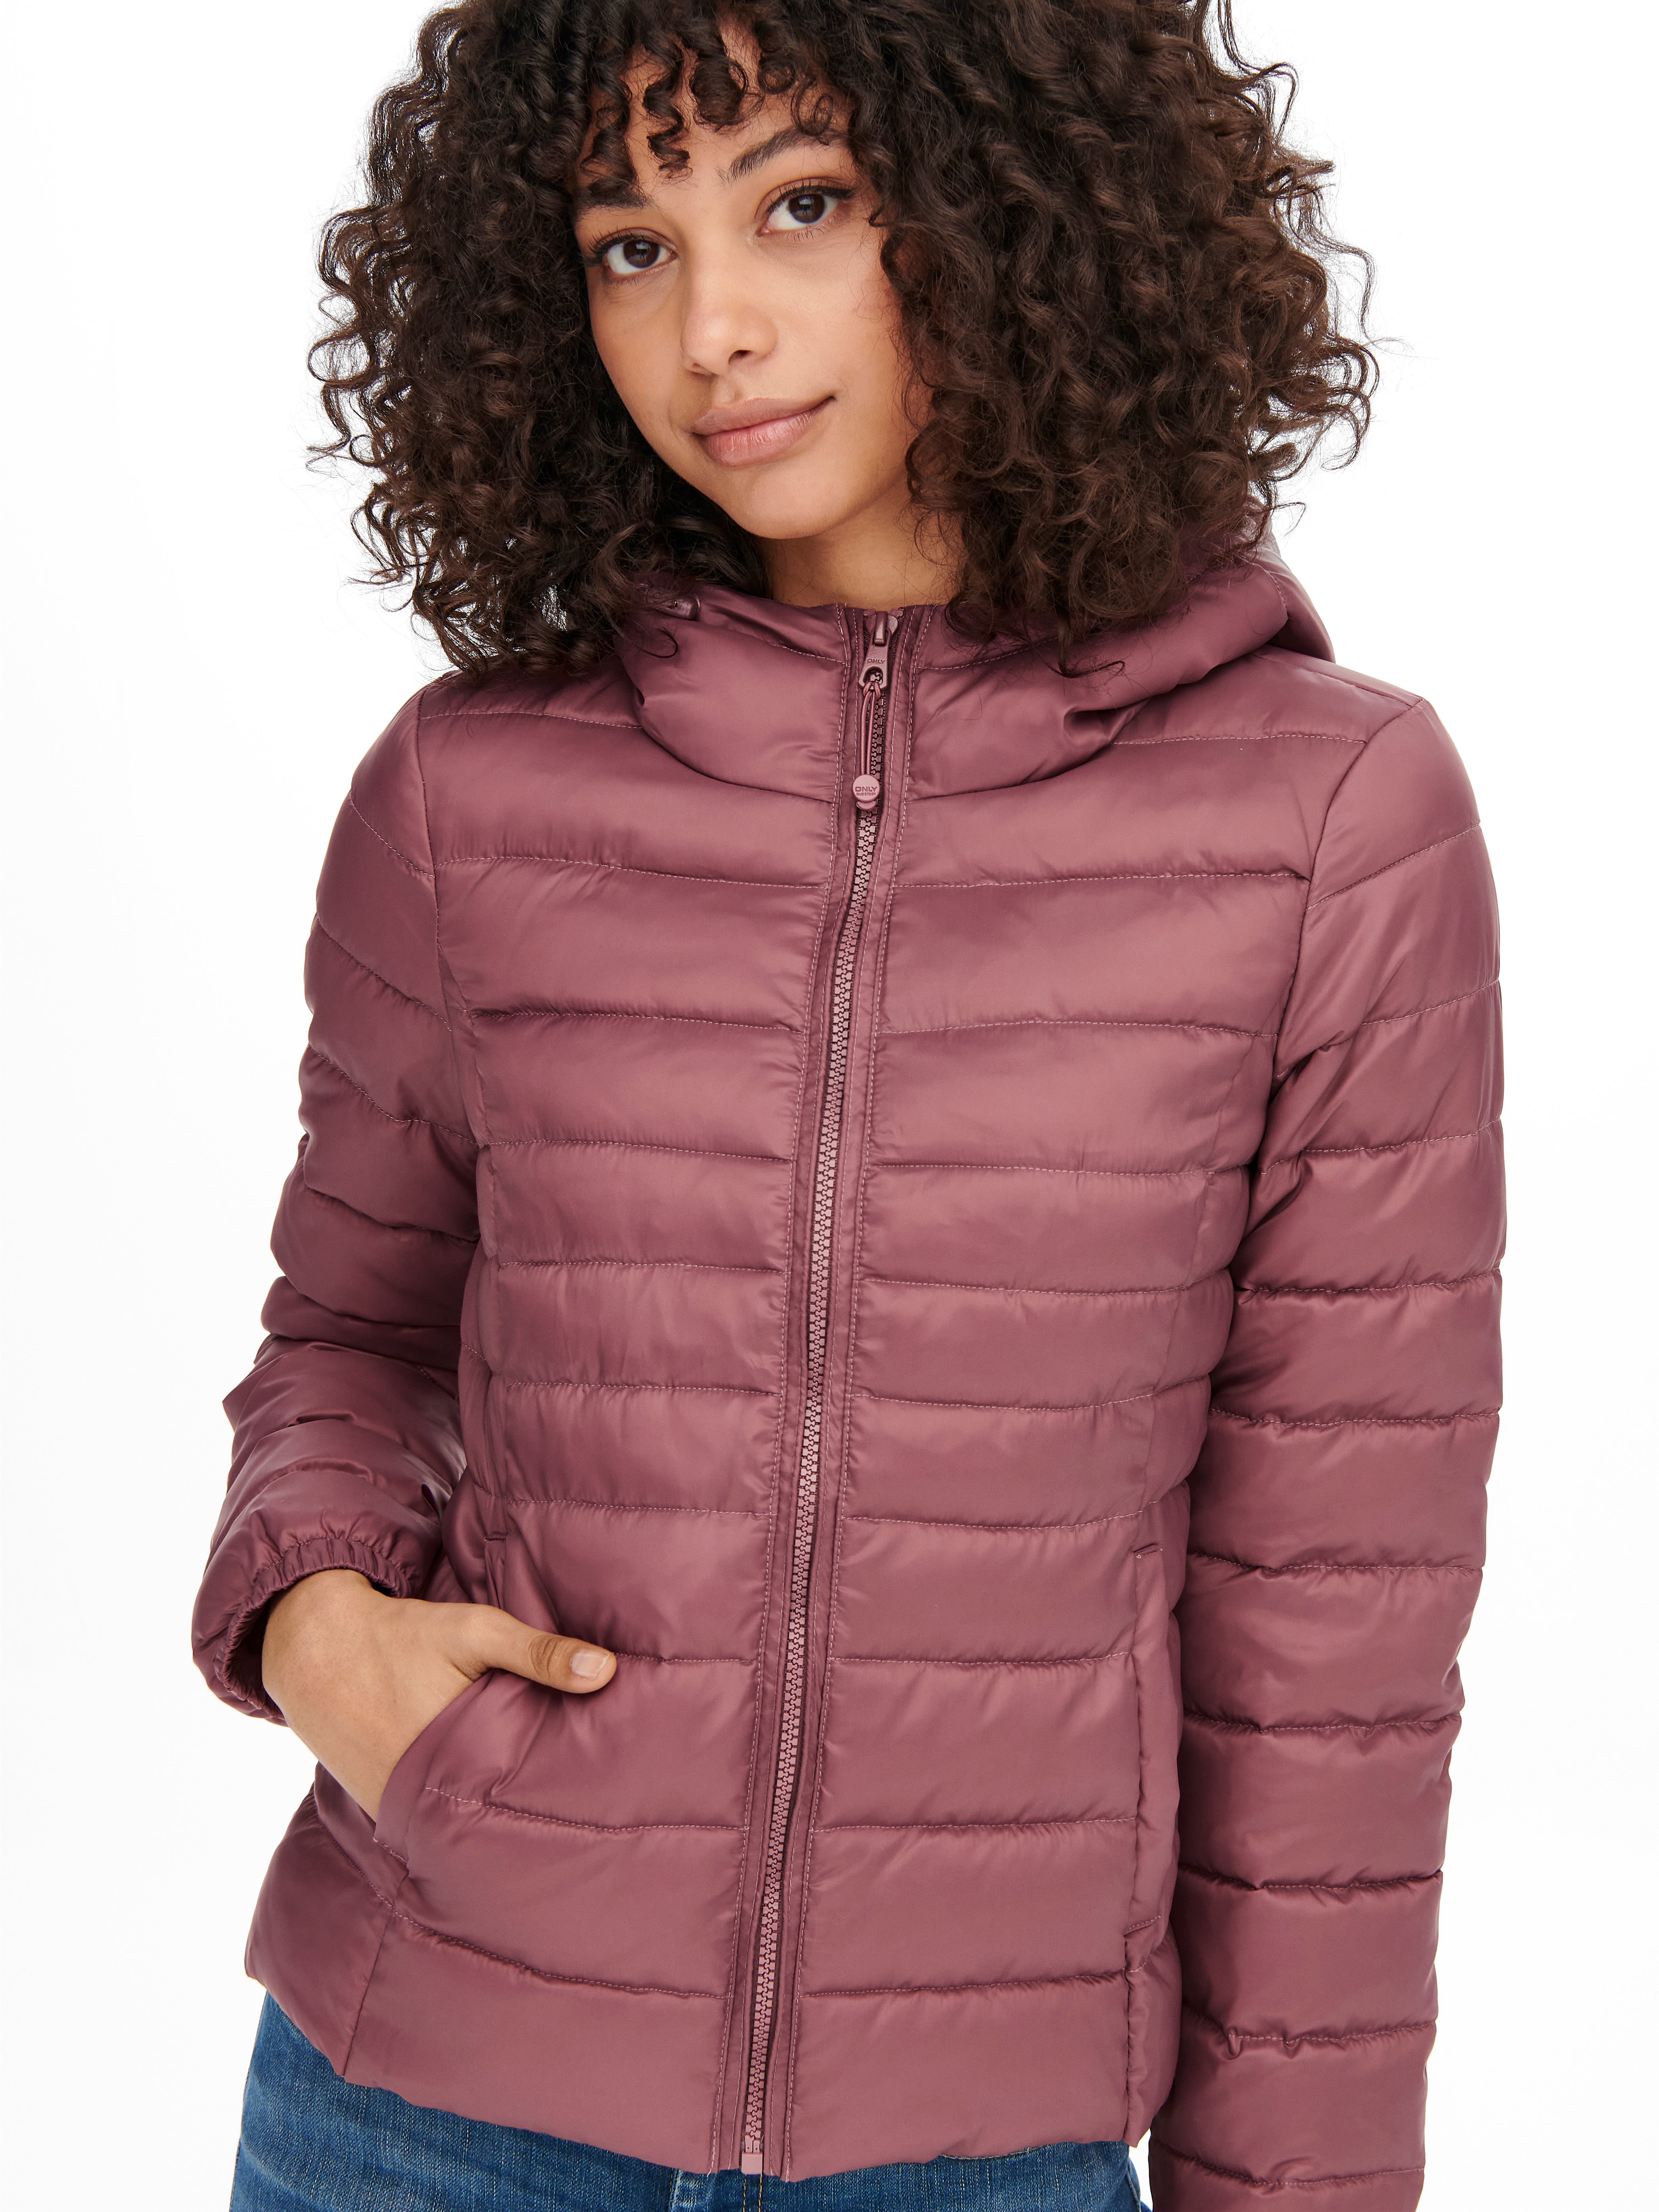 Only Carmakoma biker jacket Pink WOMEN FASHION Jackets Leatherette discount 62% 